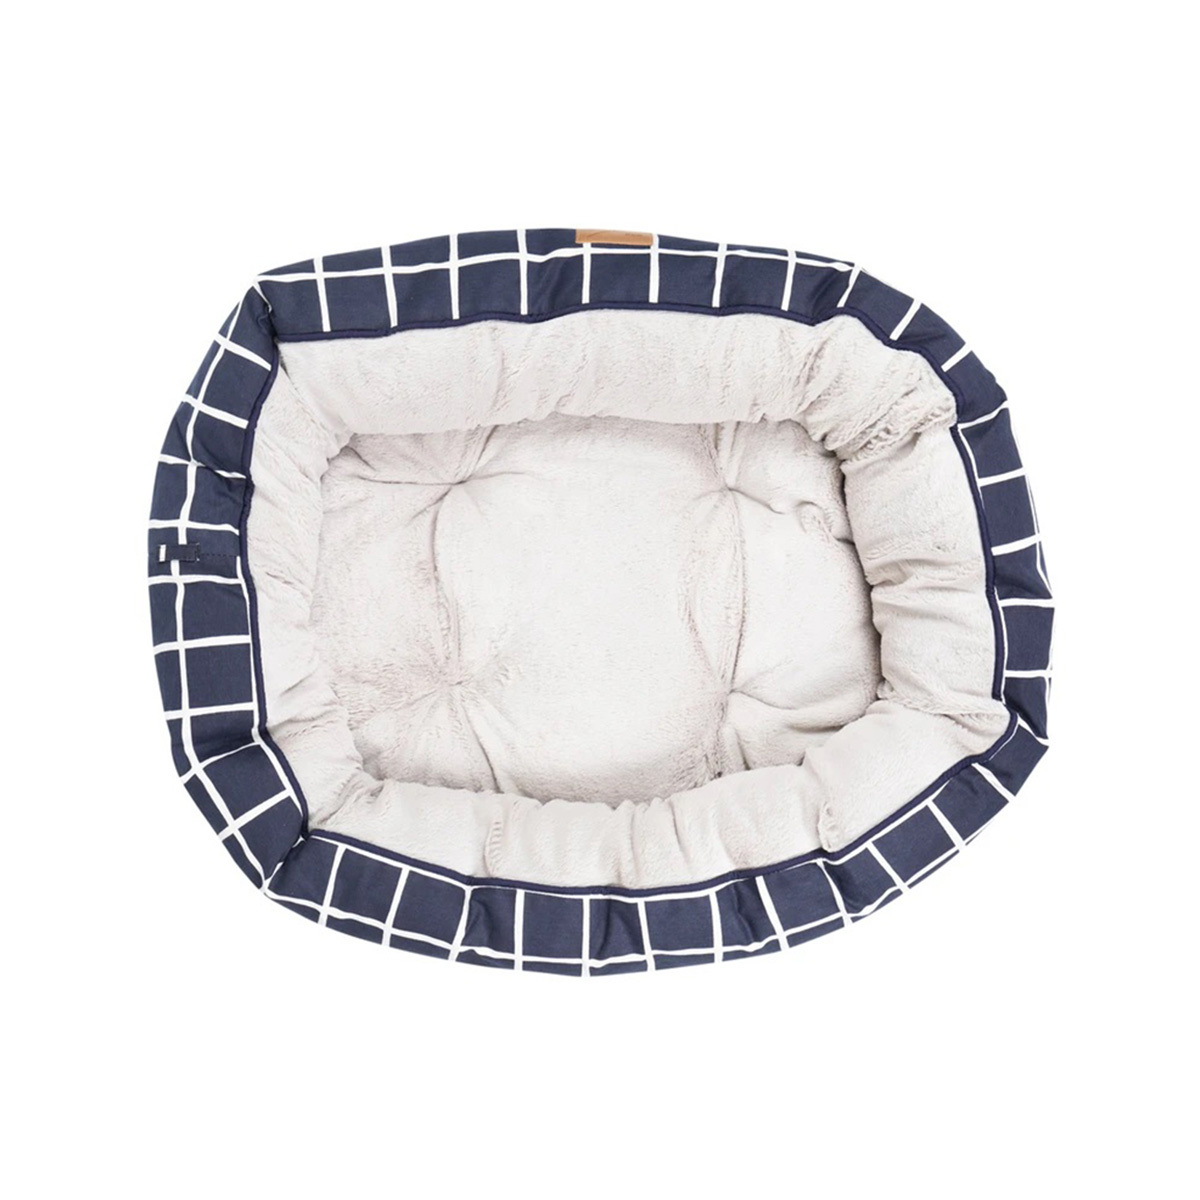 Mog & Bone 4 Seasons Reversible Dog Bed - Navy Check - Large image 1